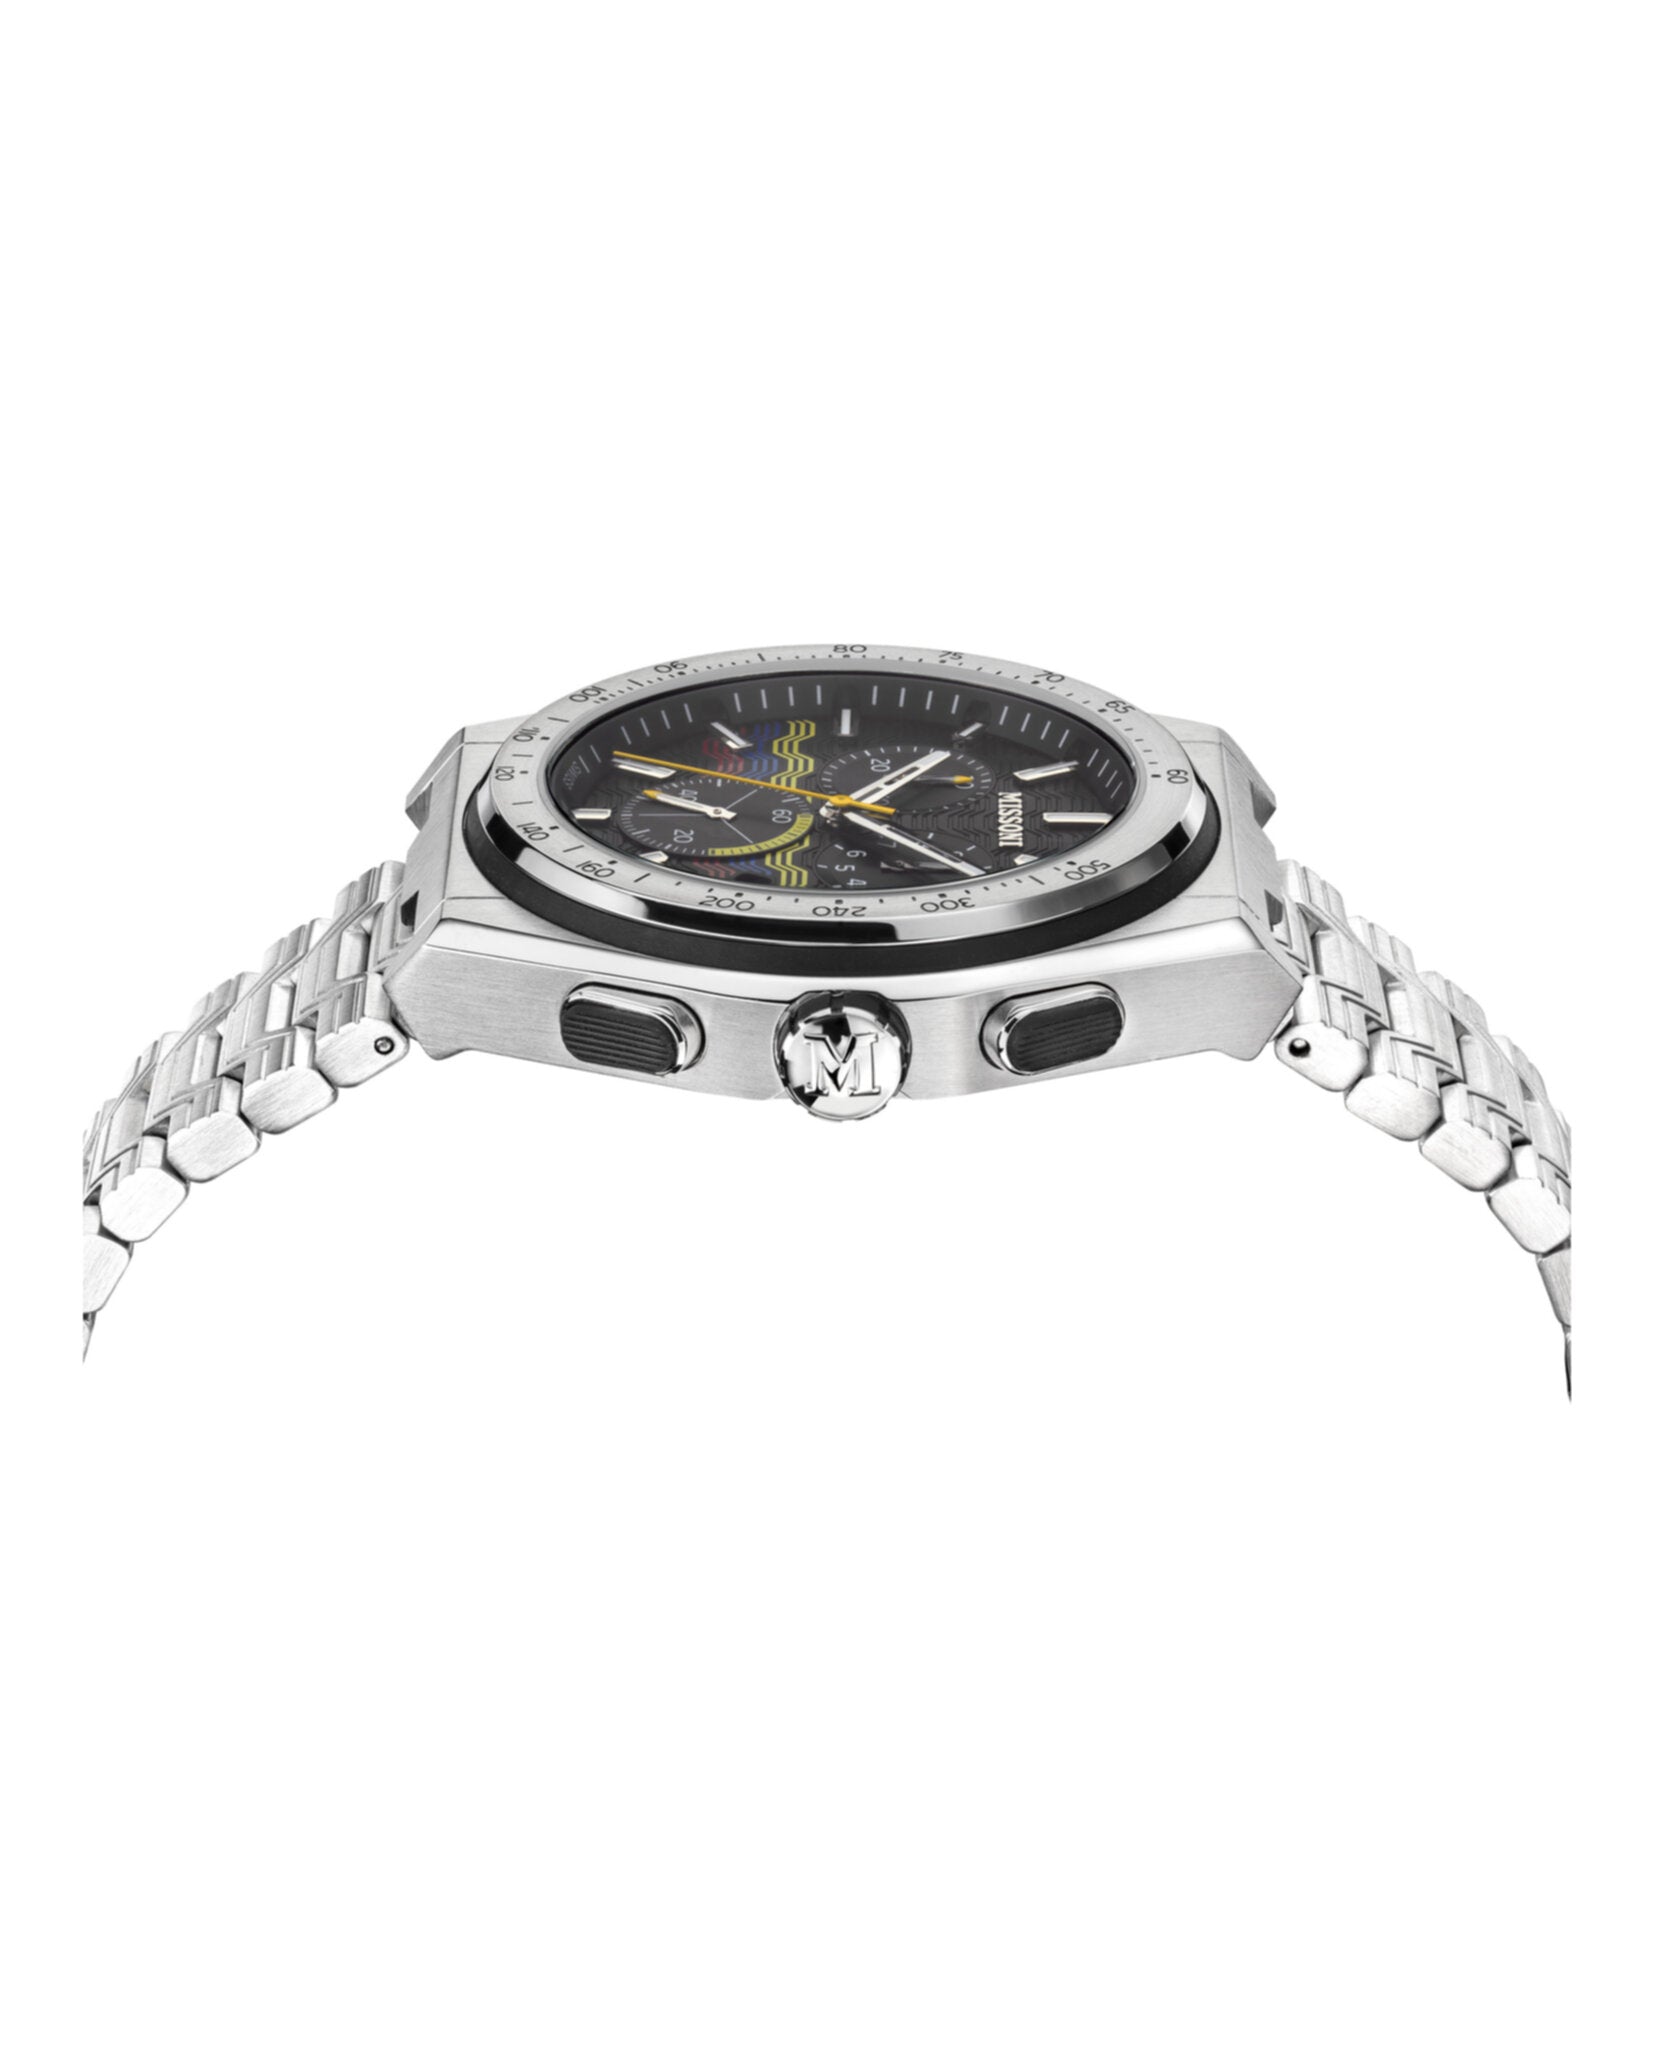 M331 Chronograph Watch